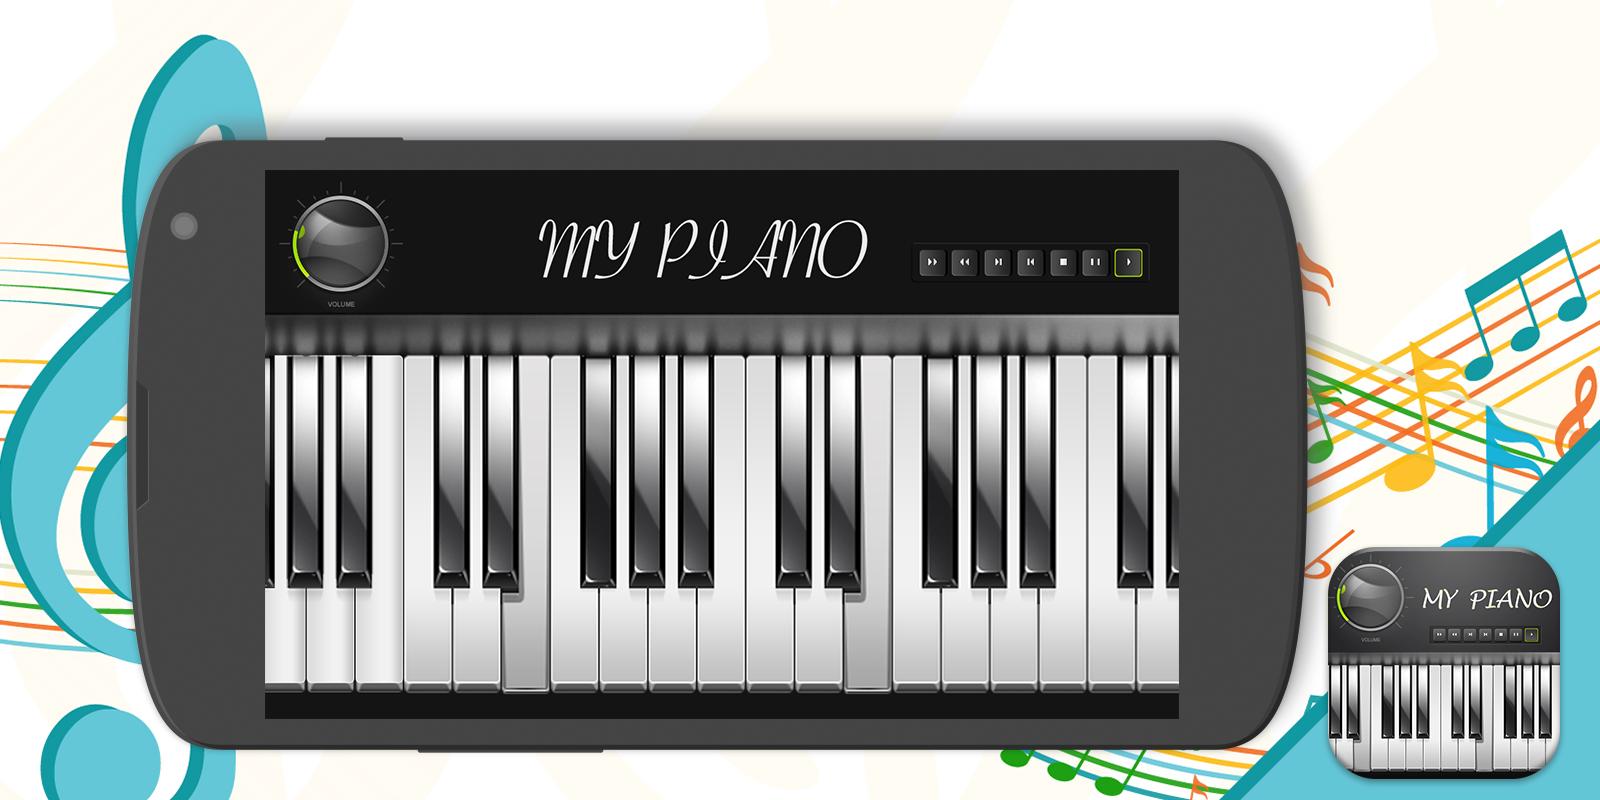 My Piano APK. Piano Virtual. Classic Piano Mod APK. Турецкий марш на виртуальном пианино.